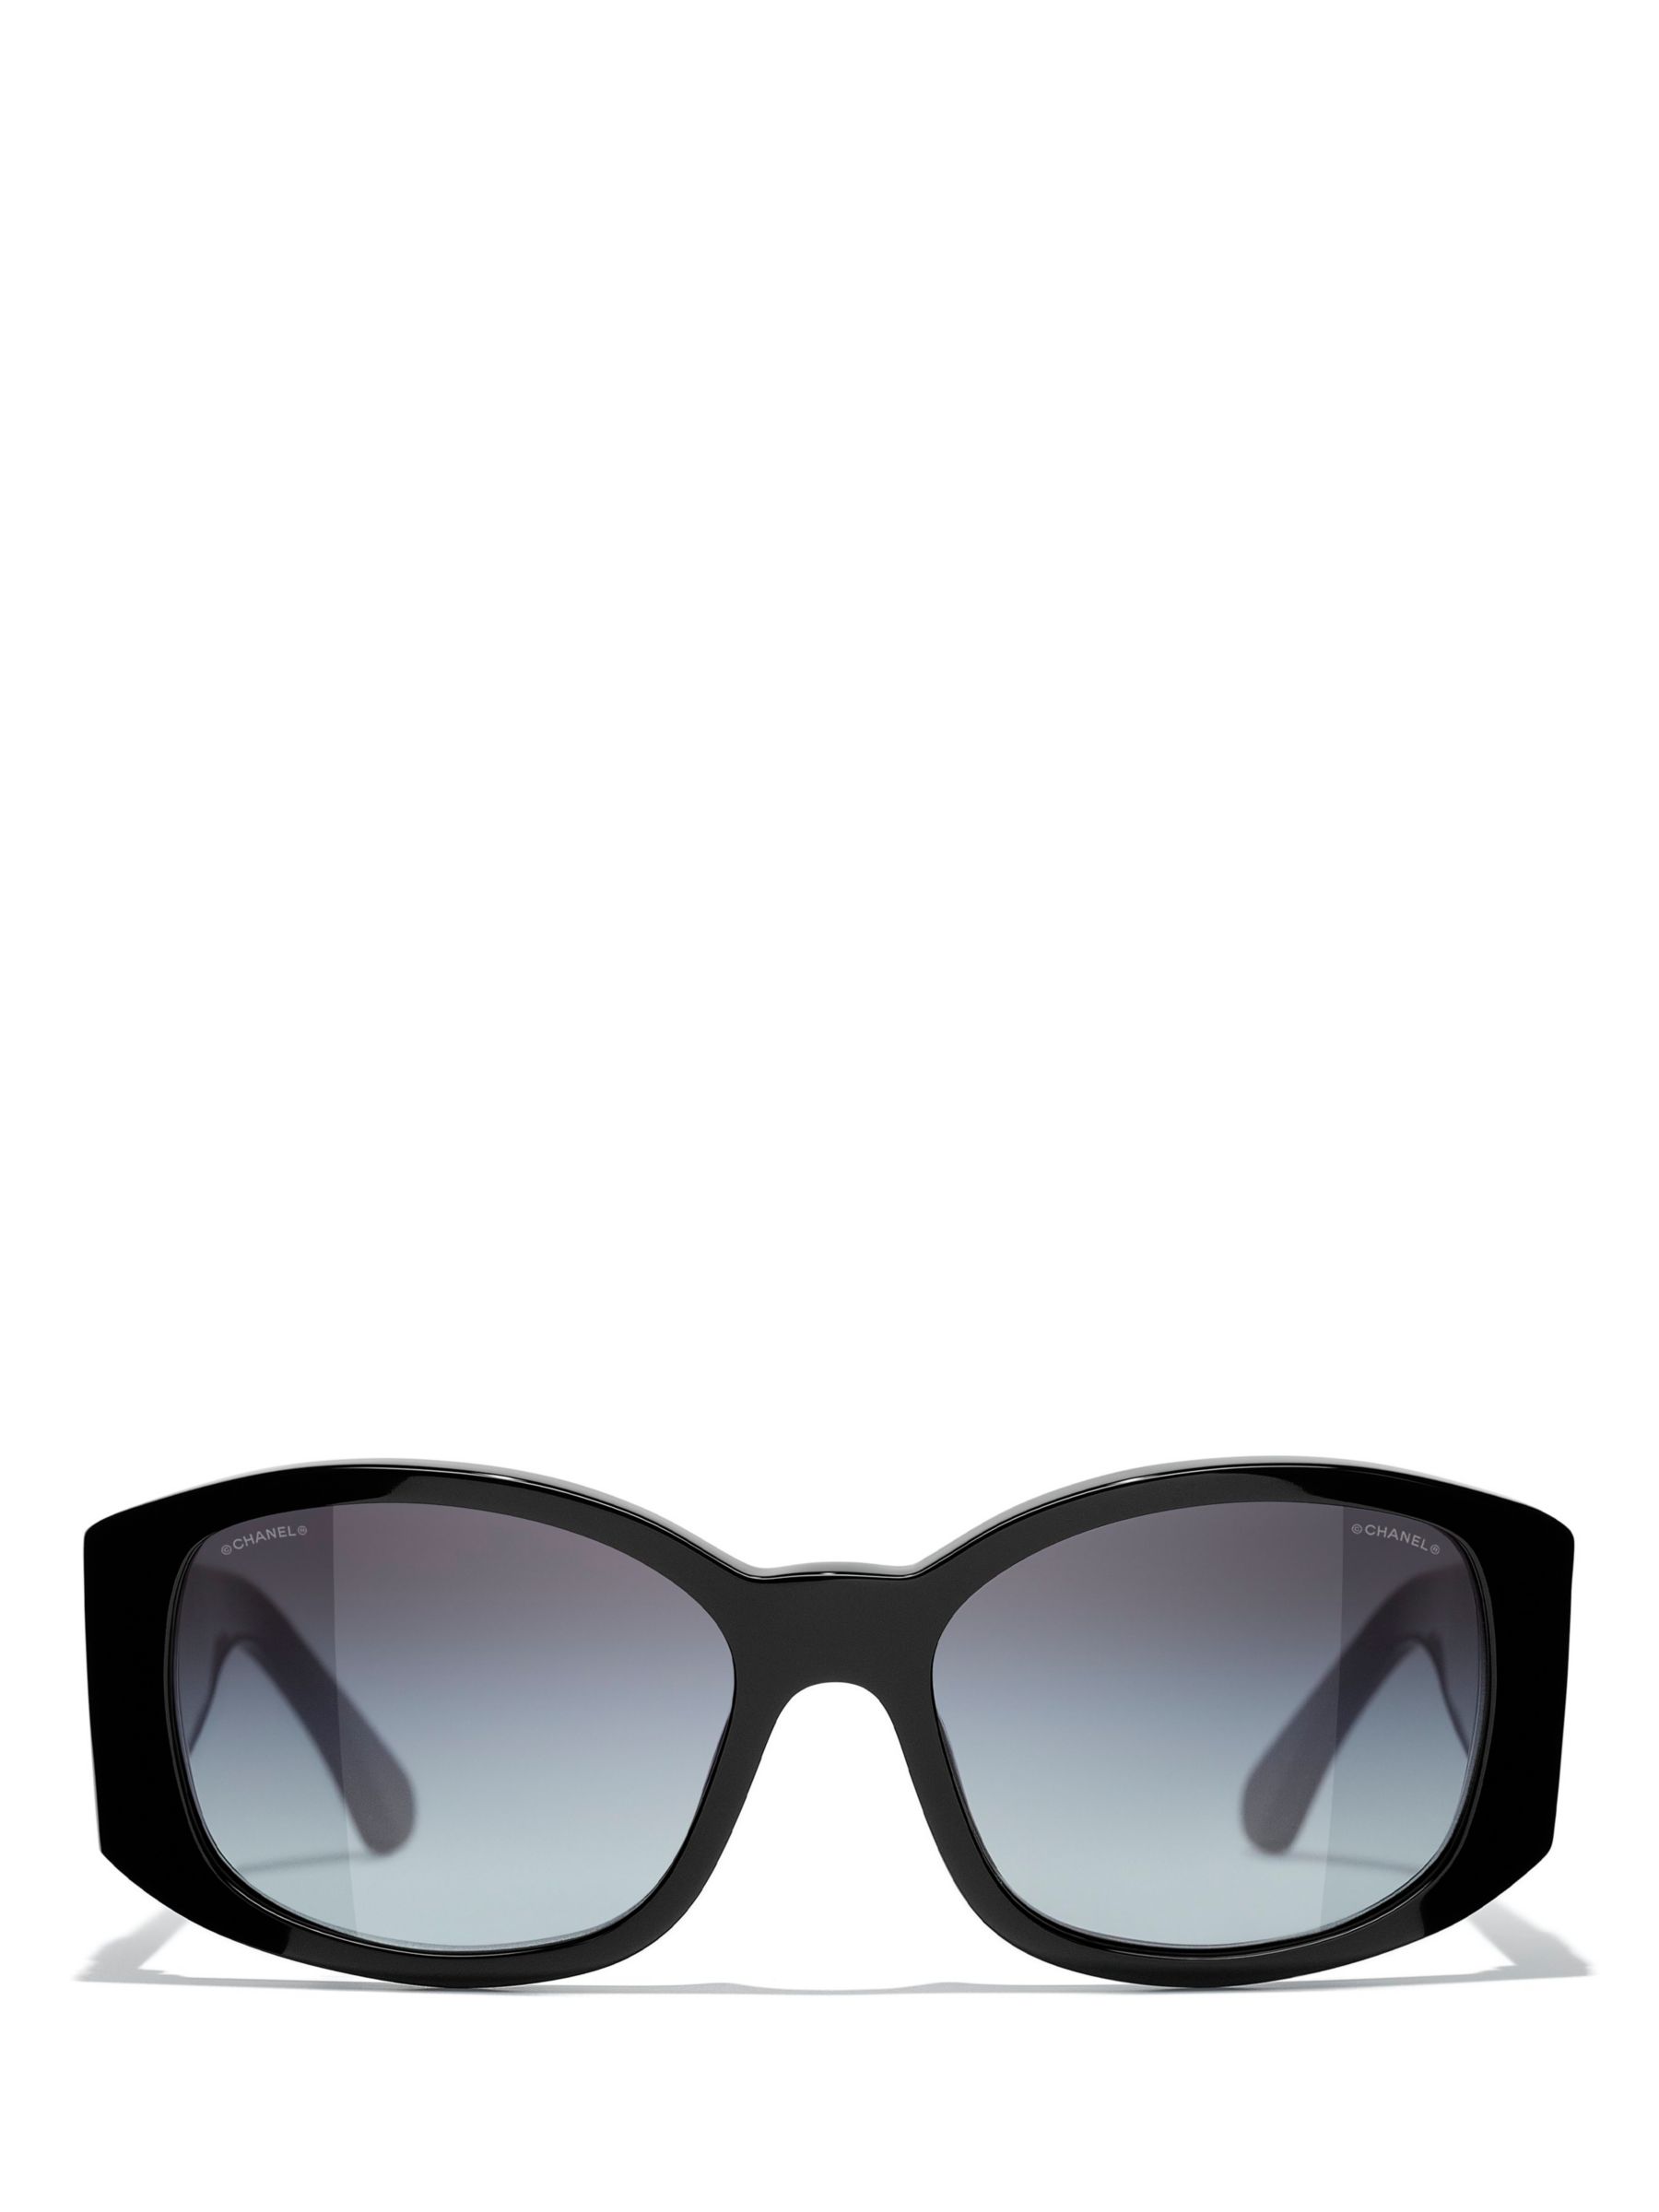 Buy CHANEL CH5450 Women's Irregular Sunglasses Online at johnlewis.com